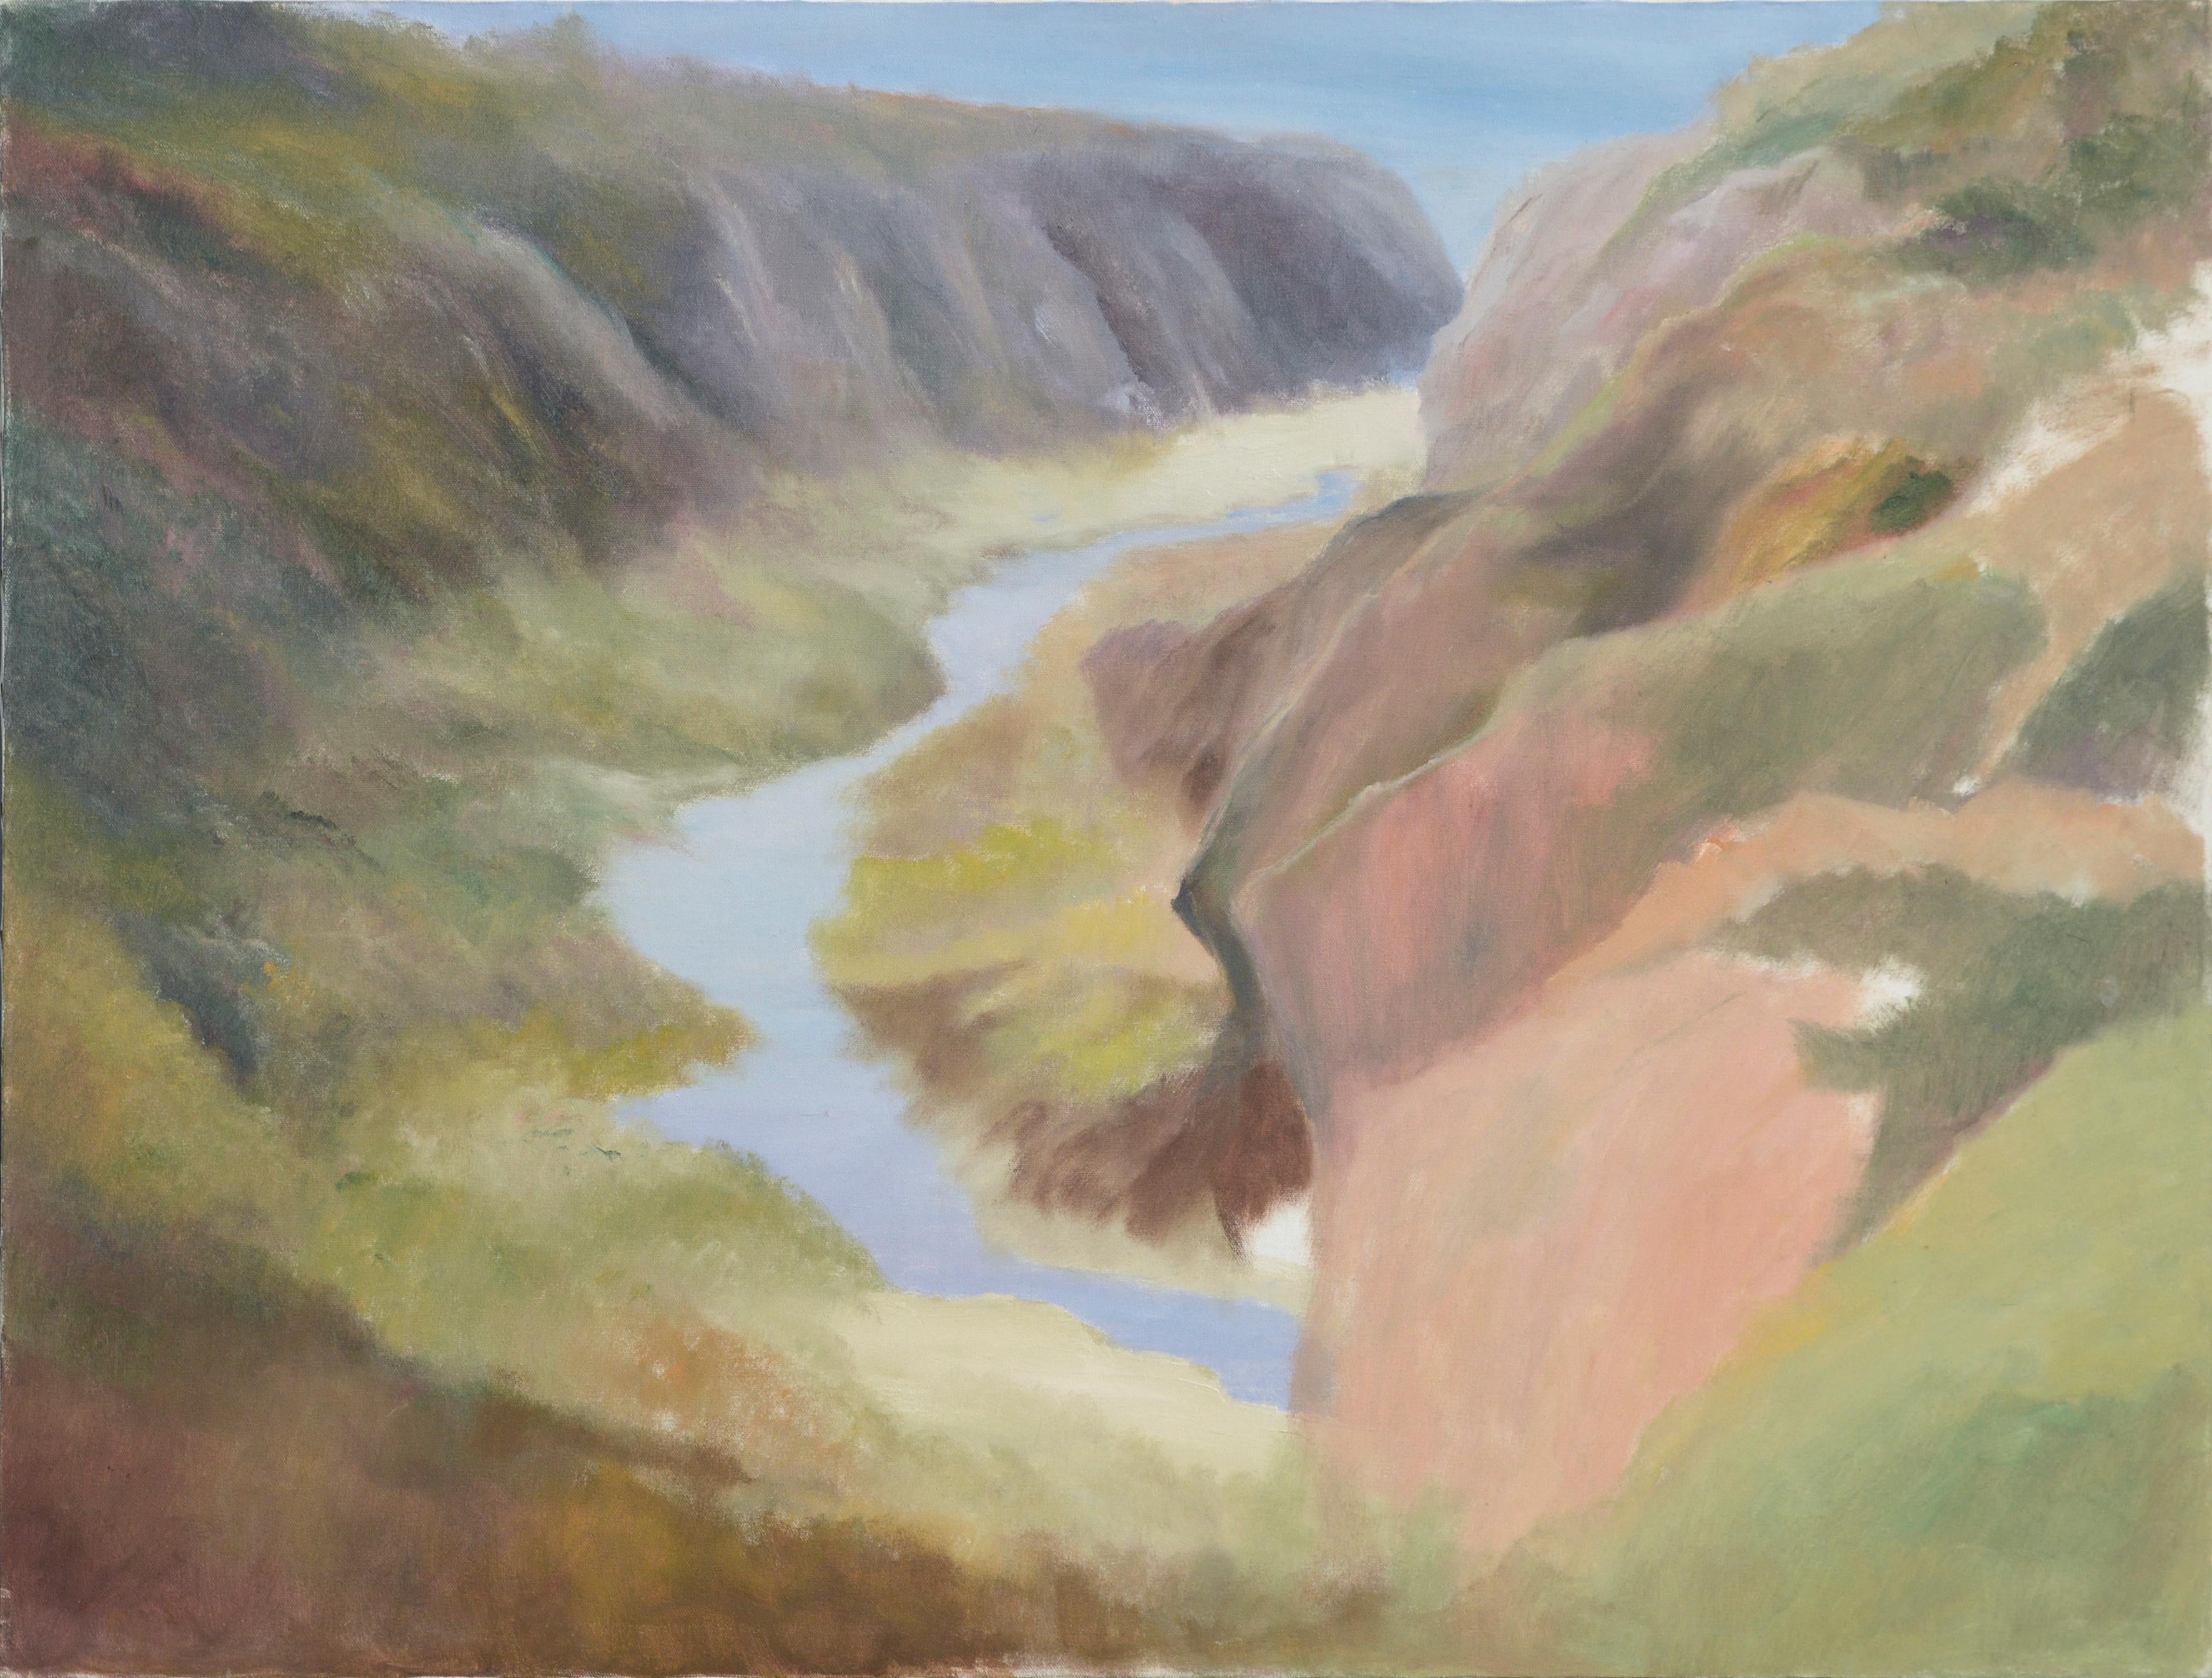 Kenneth Lucas Landscape Painting - River Outlet in Big Sur, California Coastal Bluffs Landscape 